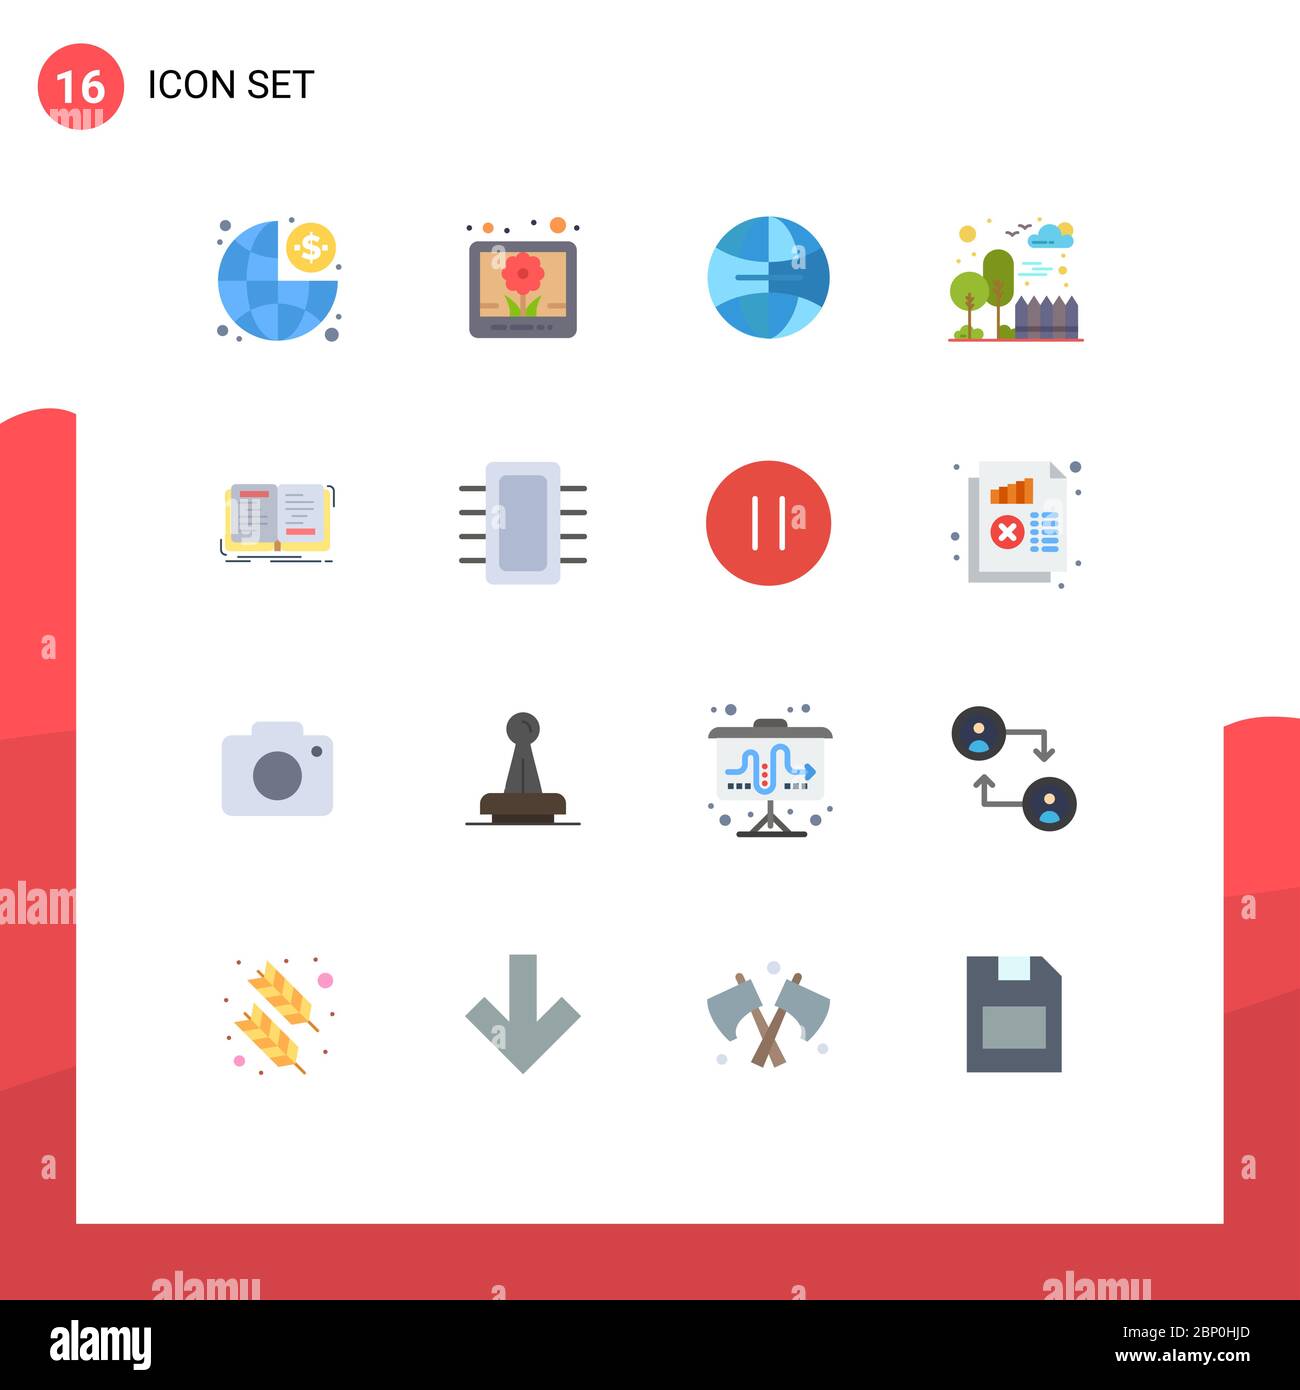 Set of 16 Modern UI Icons Symbols Signs for writing, novel, globe, book ...